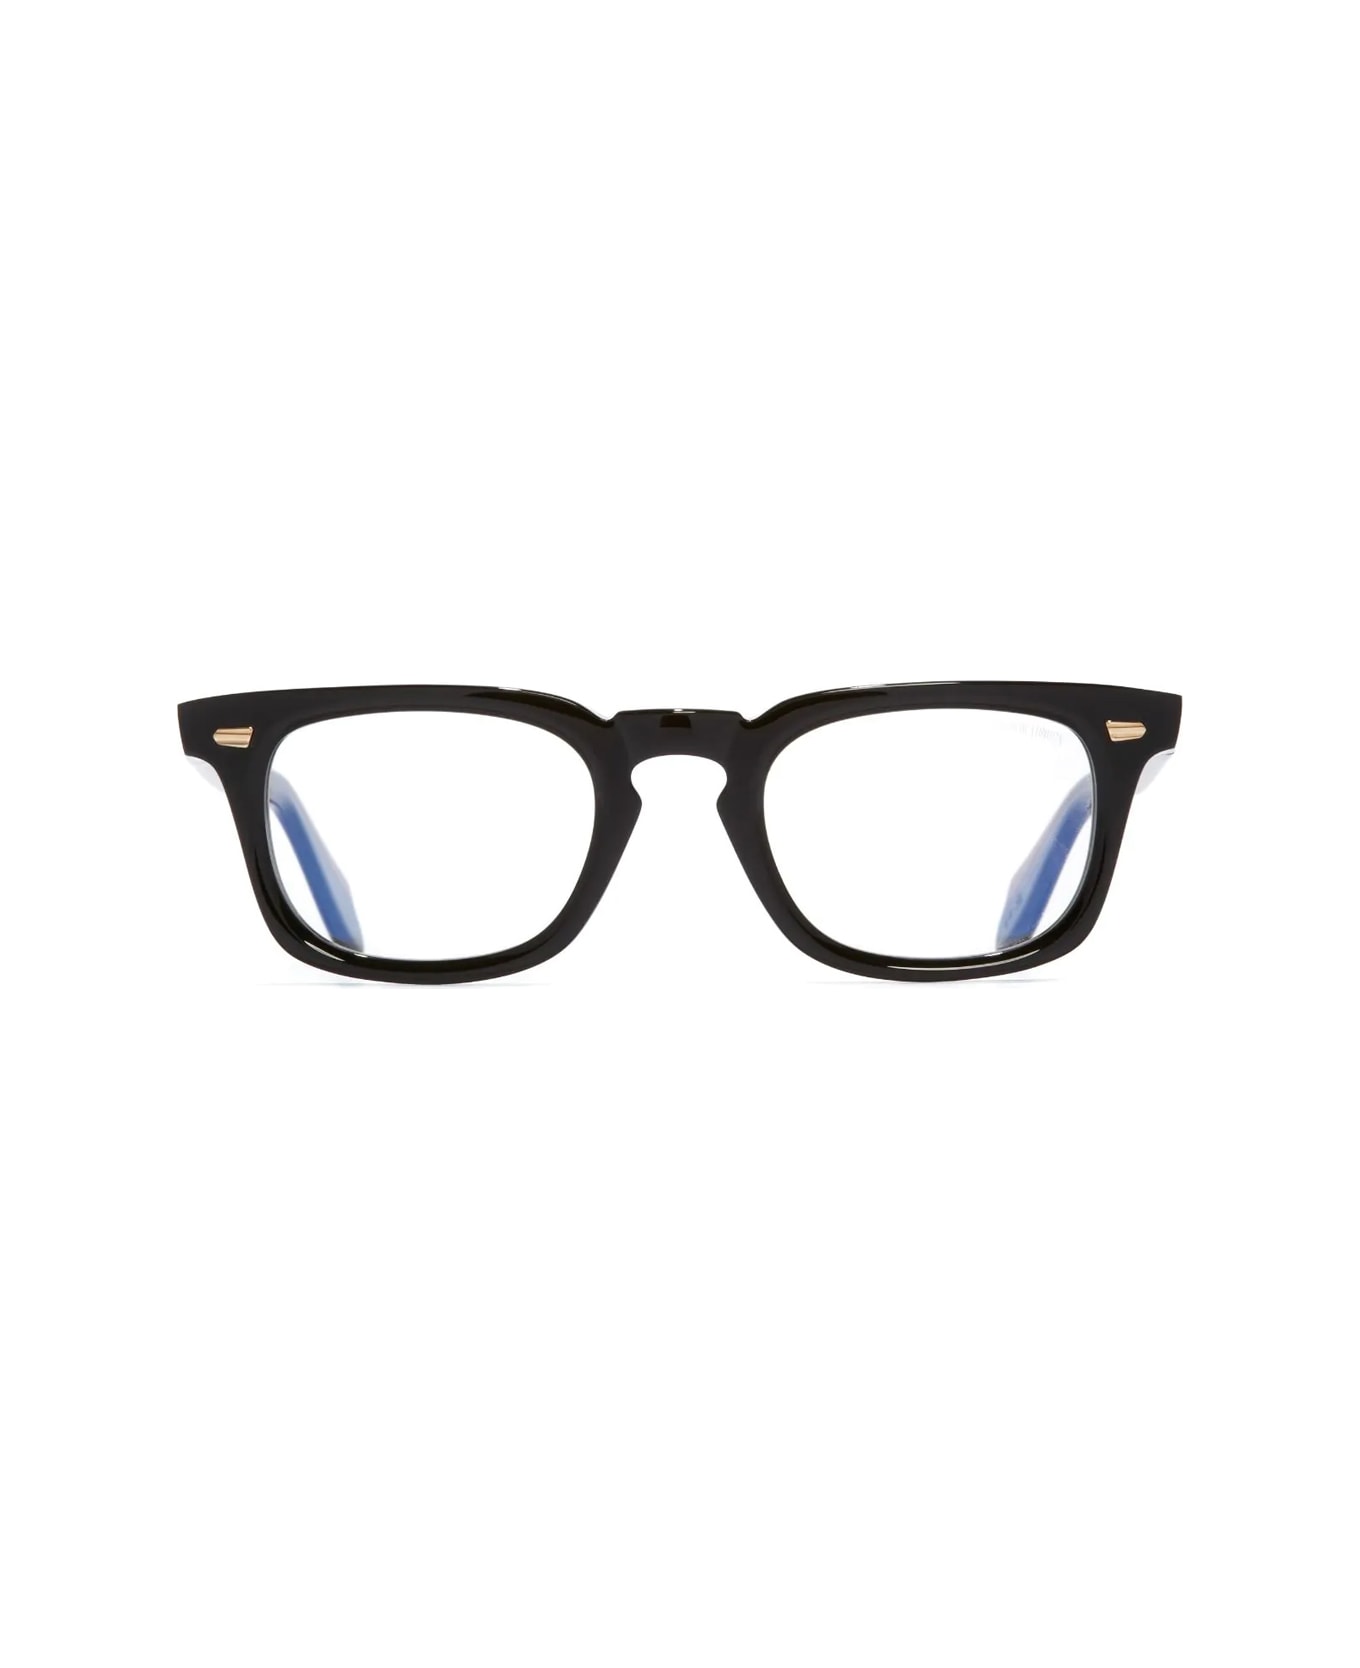 Cutler and Gross 1406 01 Glasses - Nero アイウェア